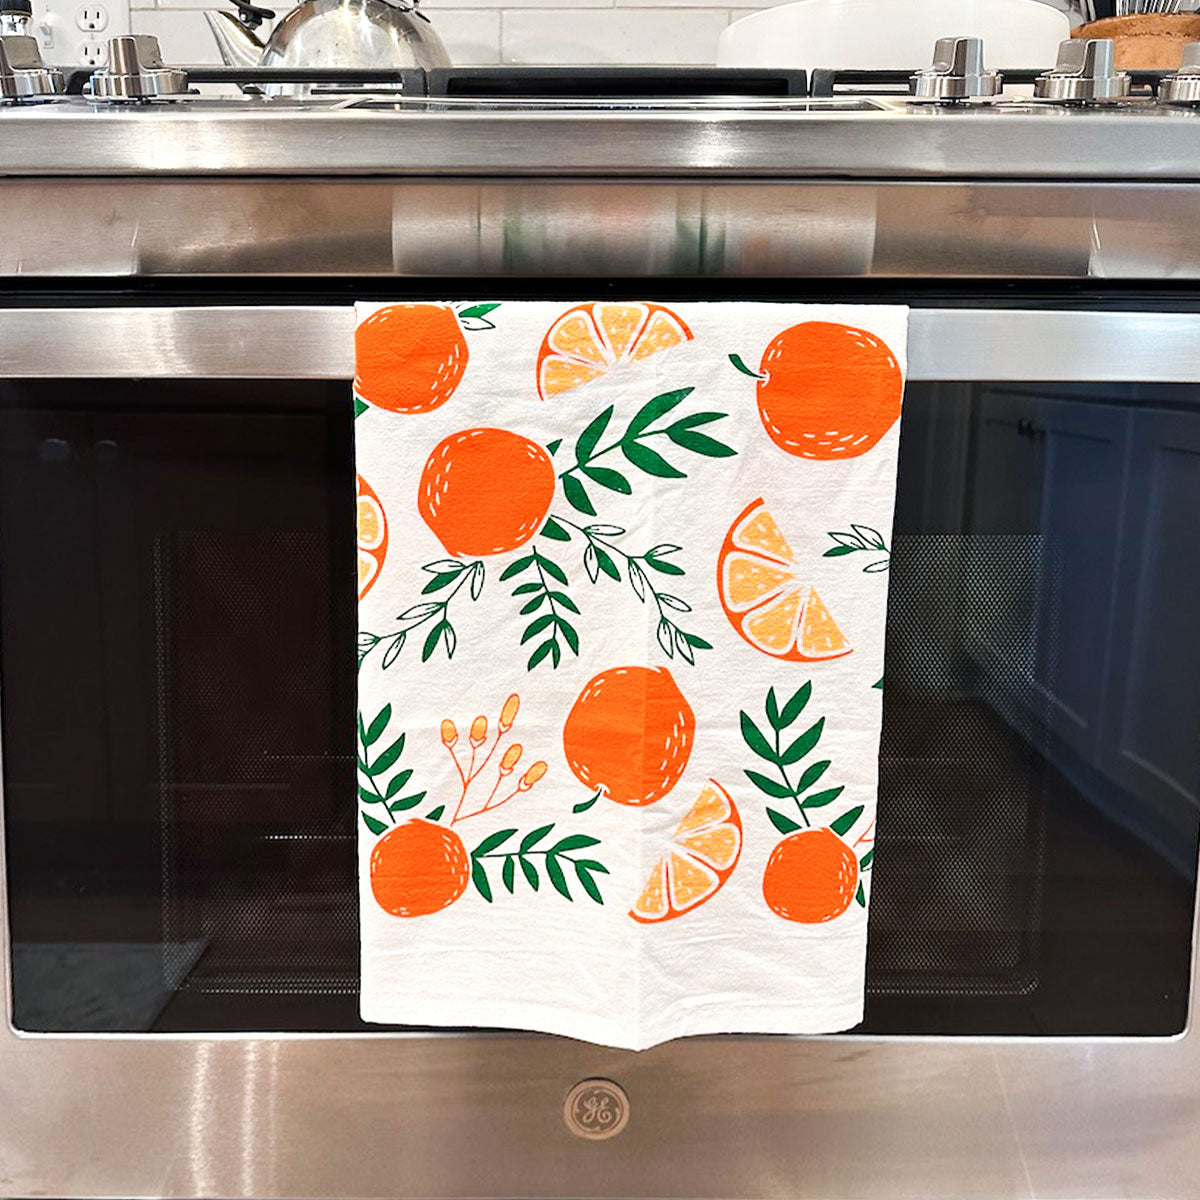 Orange Dish Towel – Bumbleberry Farms